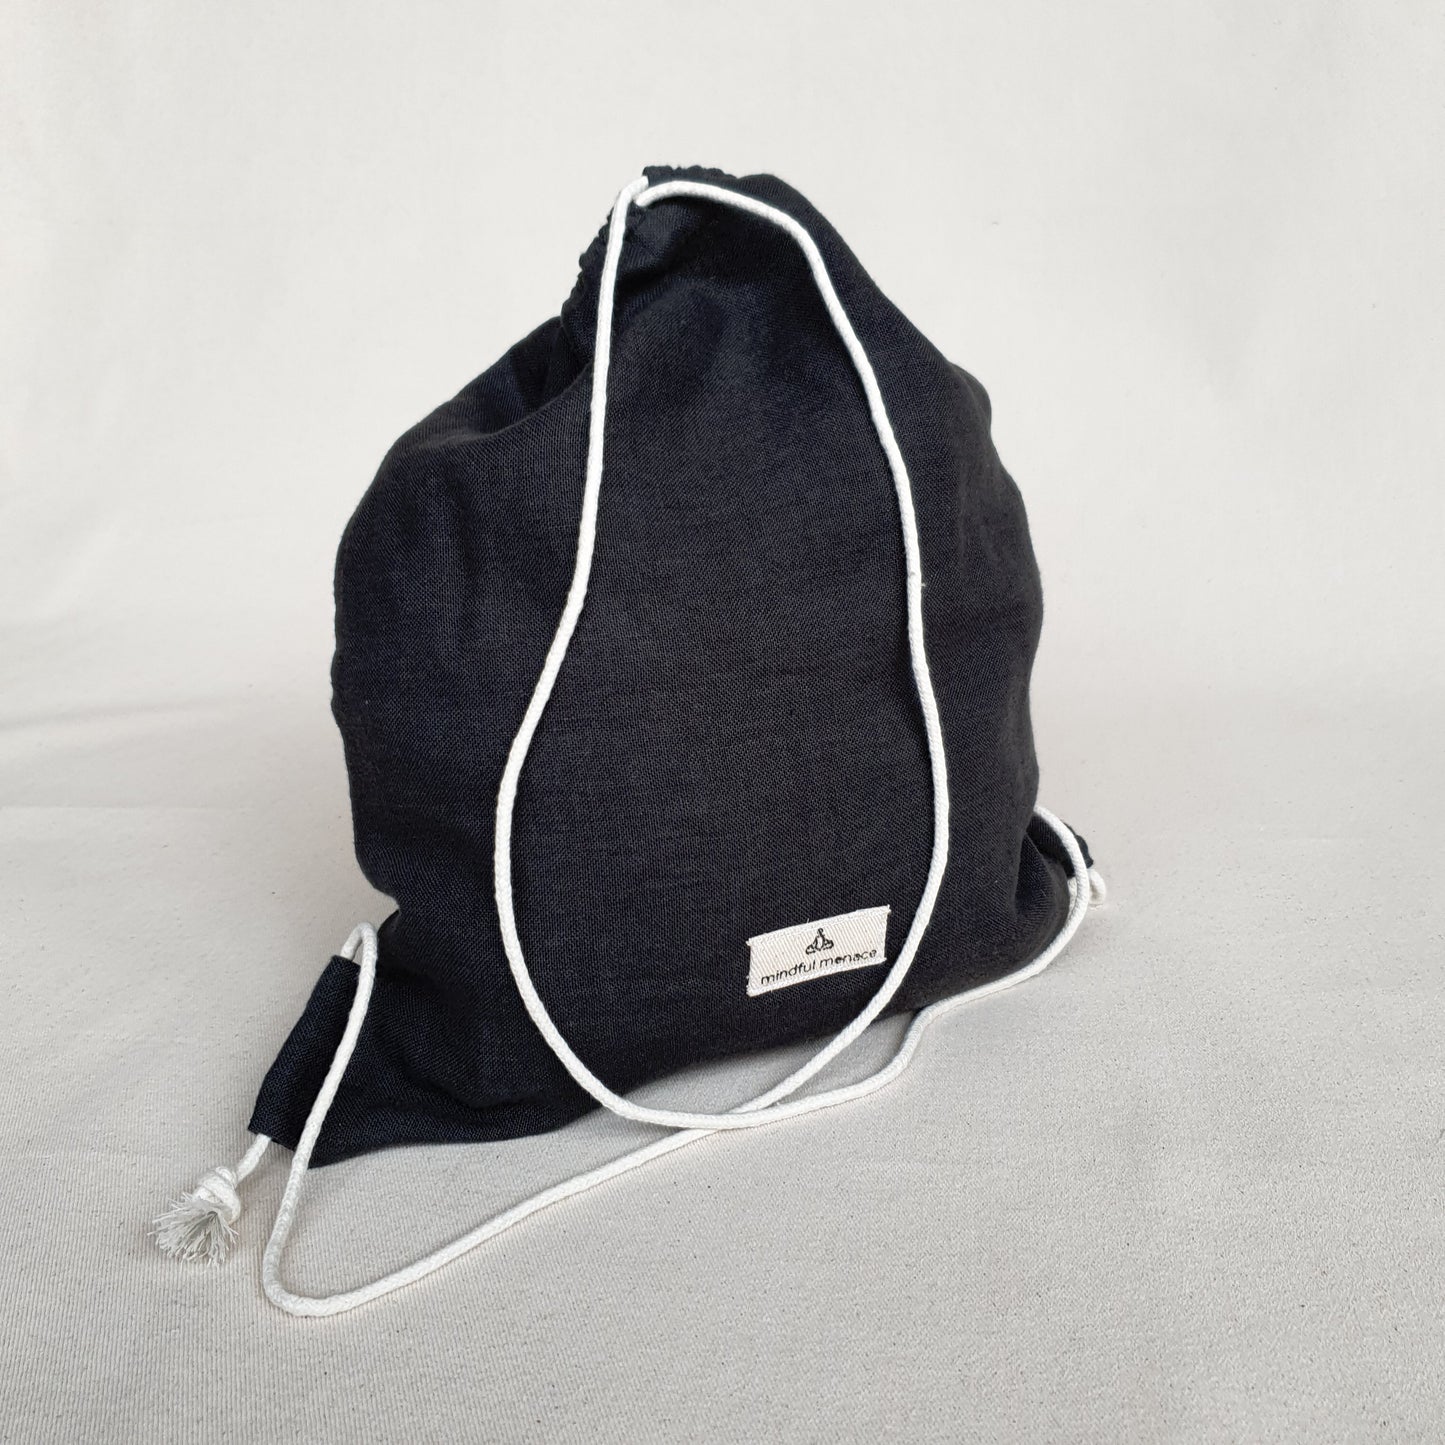 Linen drawstring bag